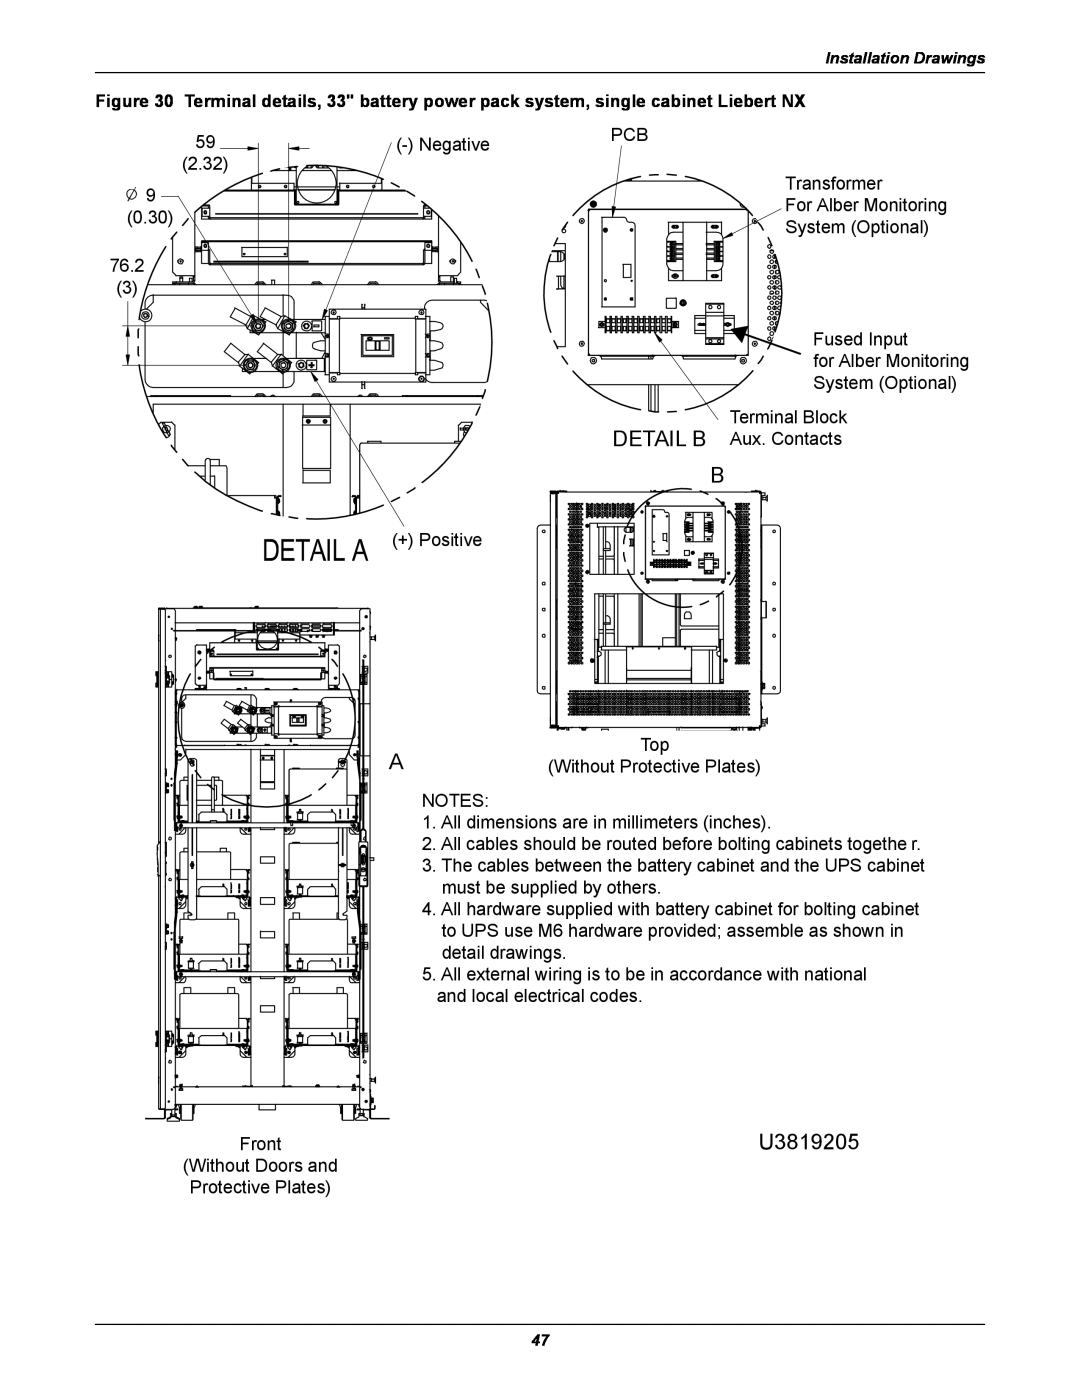 Emerson 480V, 60HZ user manual U3819205 